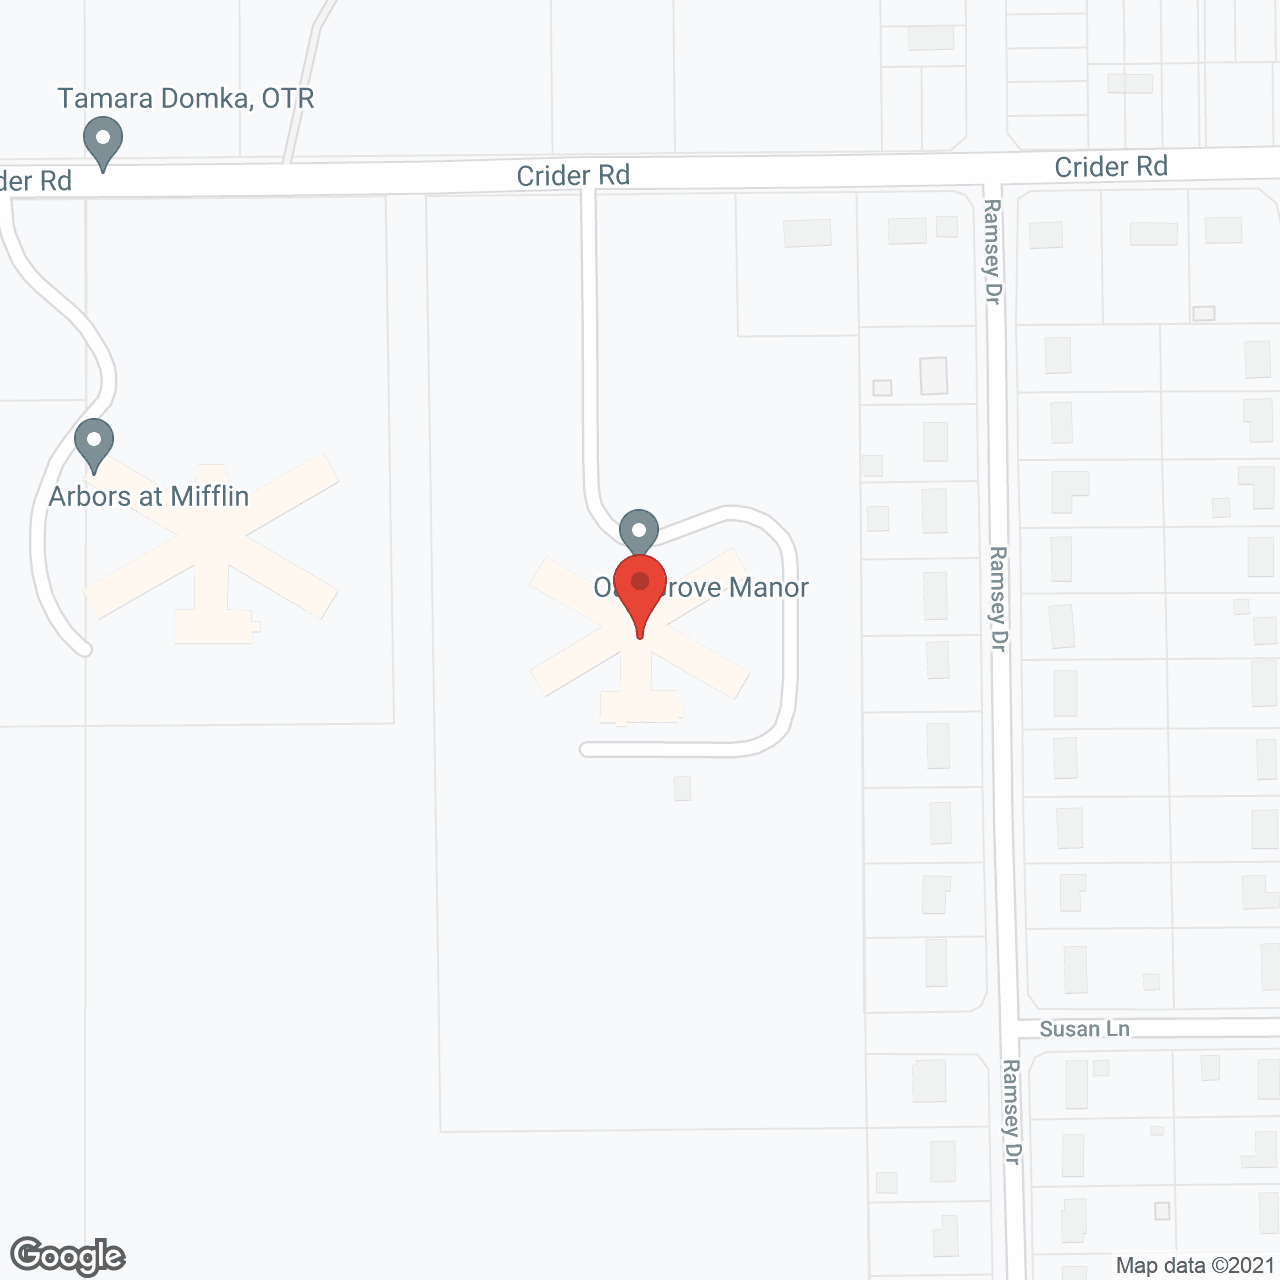 Oak Grove Manor in google map